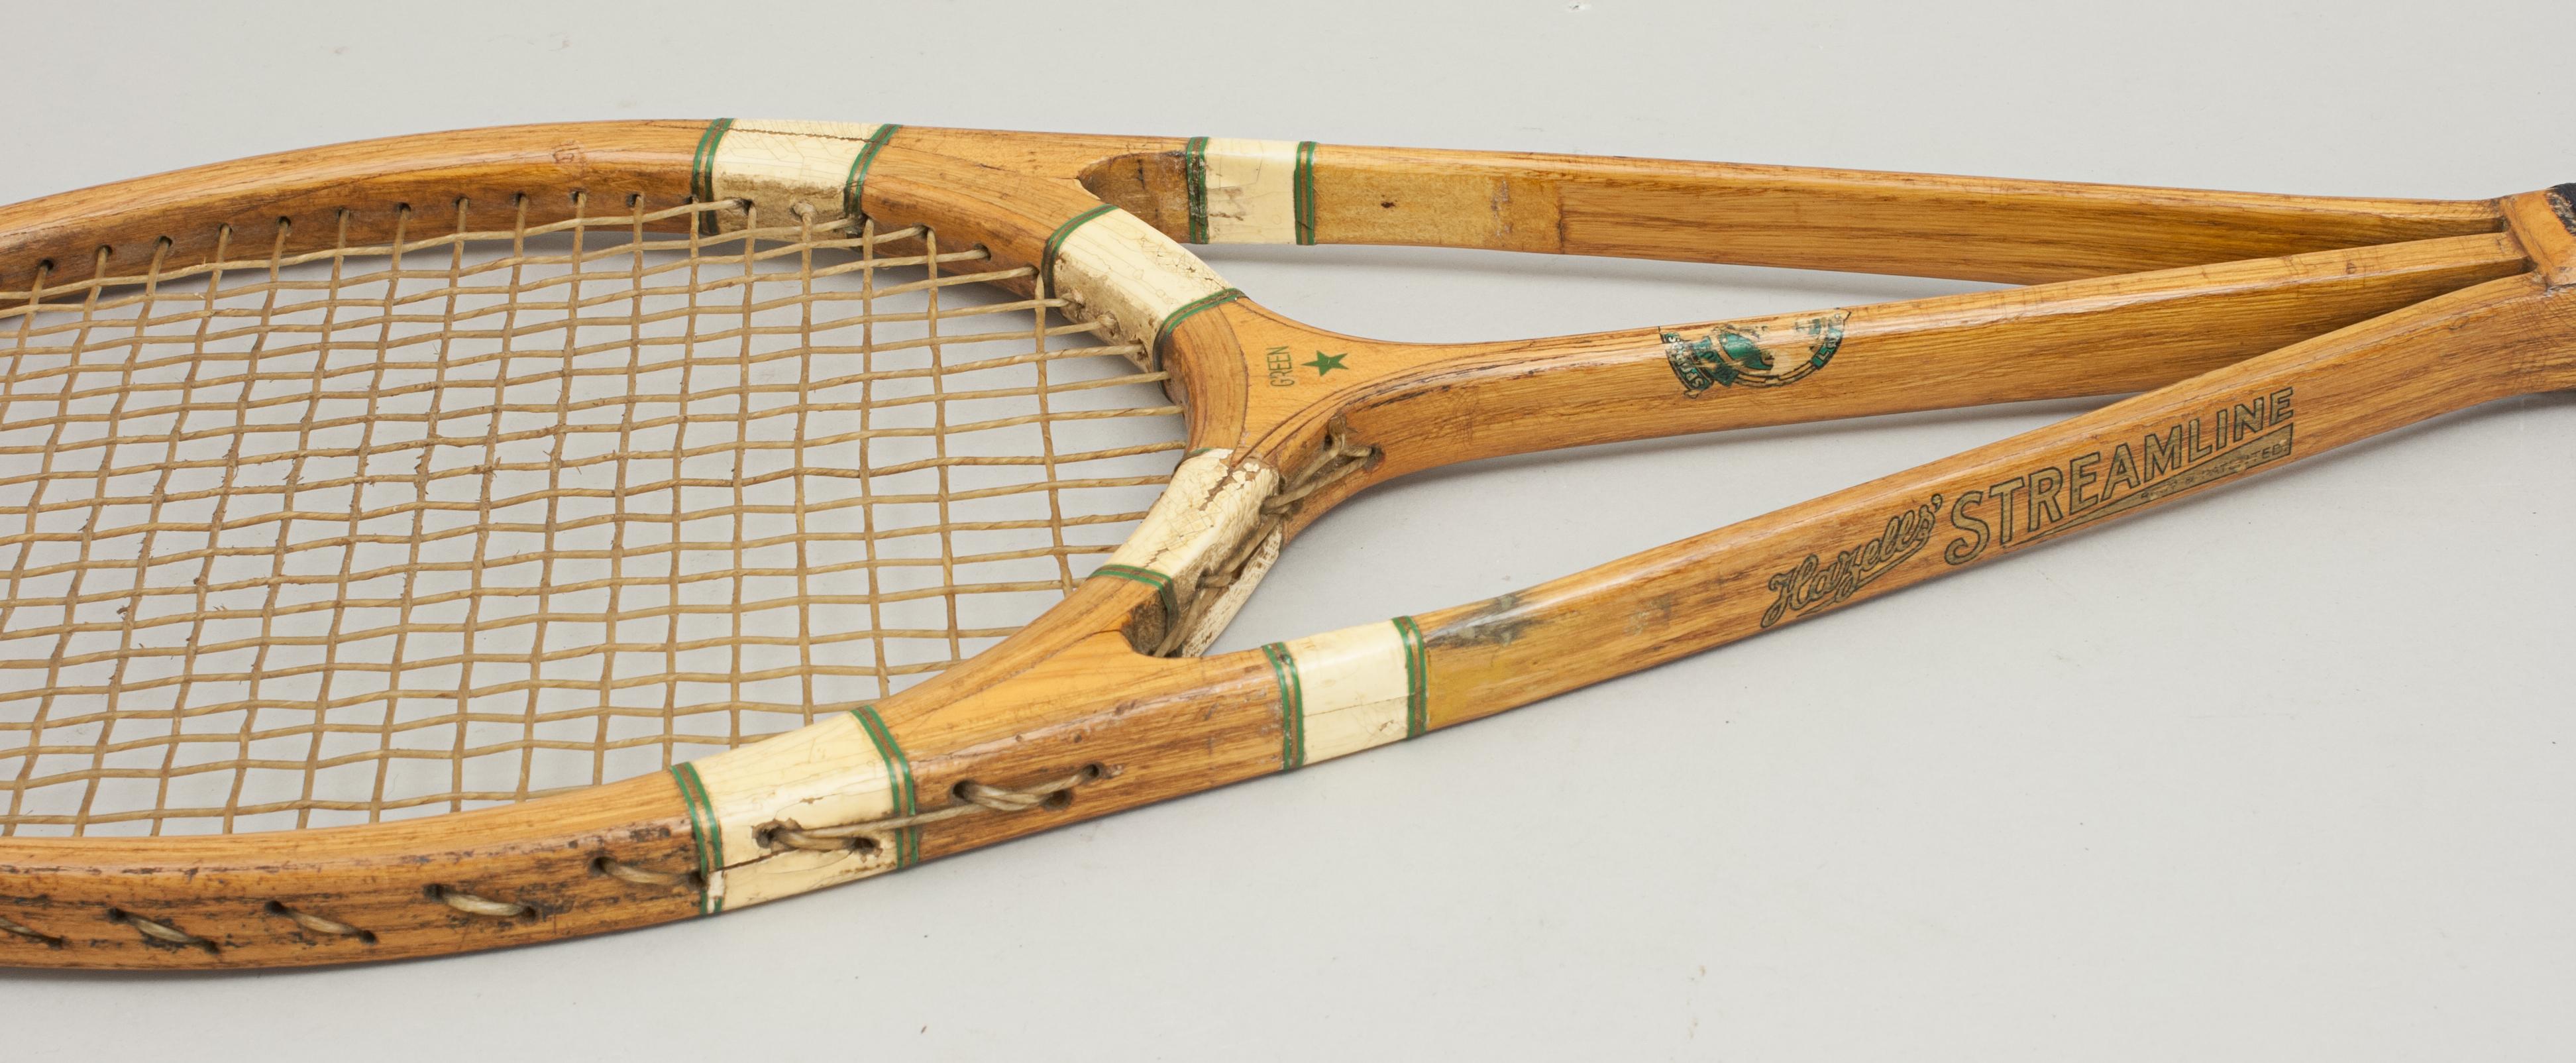 Mid-20th Century Hazell Streamline Tennis Racket, Green Star, Frank Donisthorpe